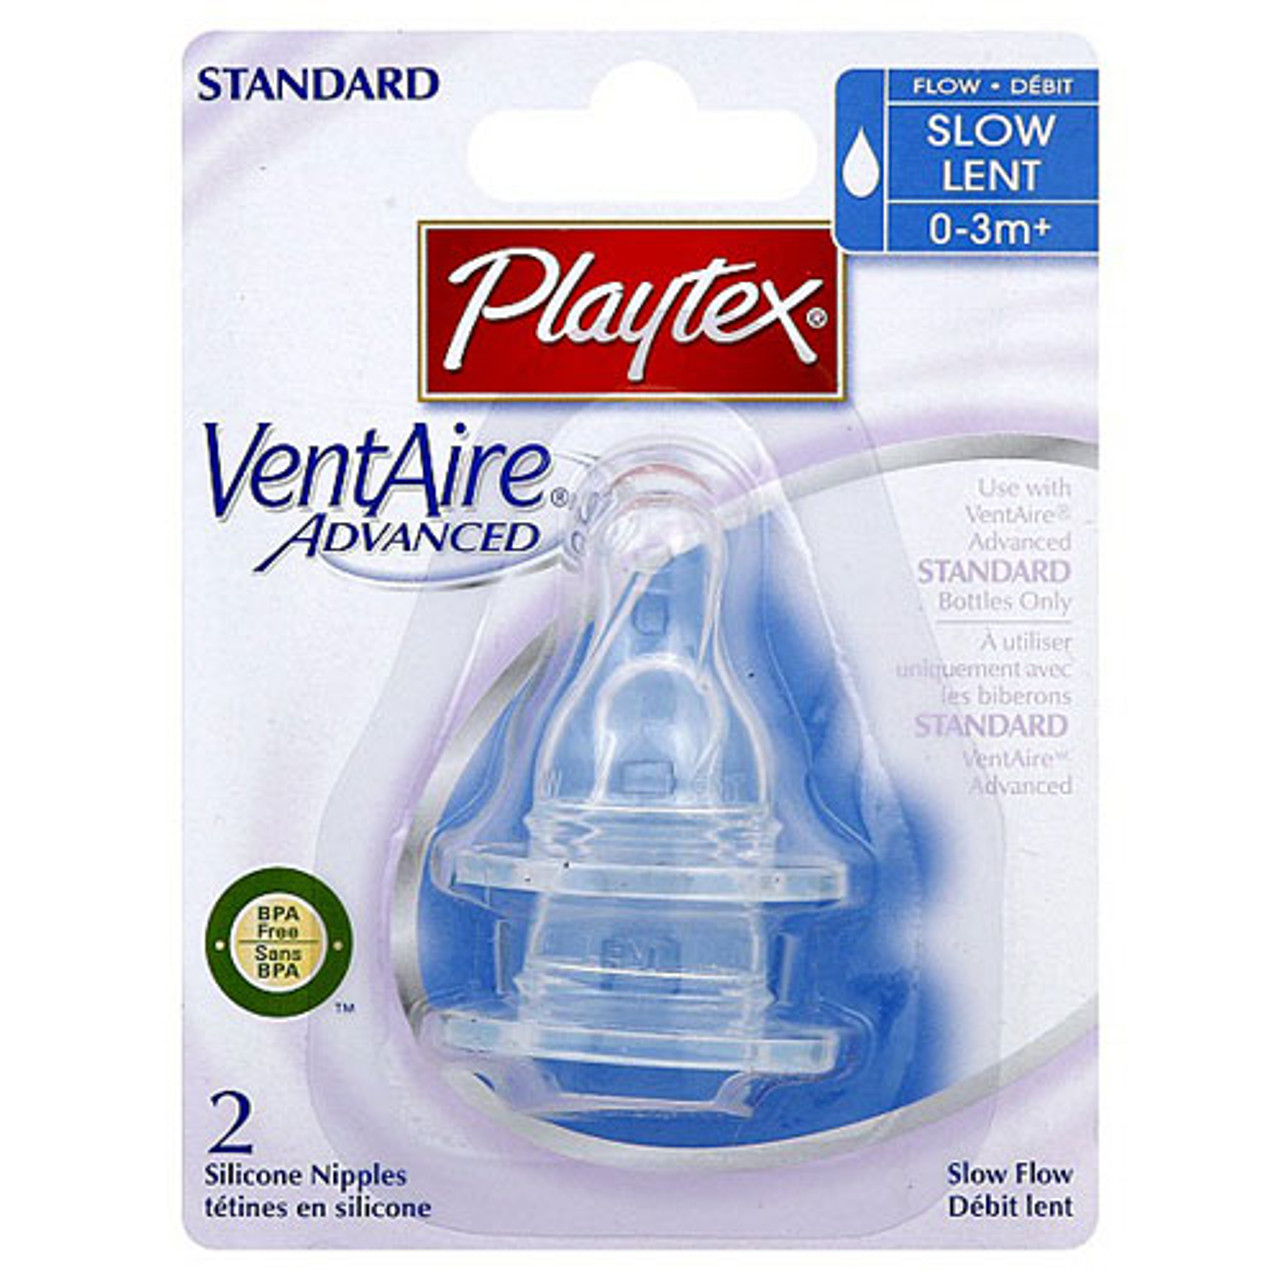 Playtex VentAire Standard Bottles Reviews